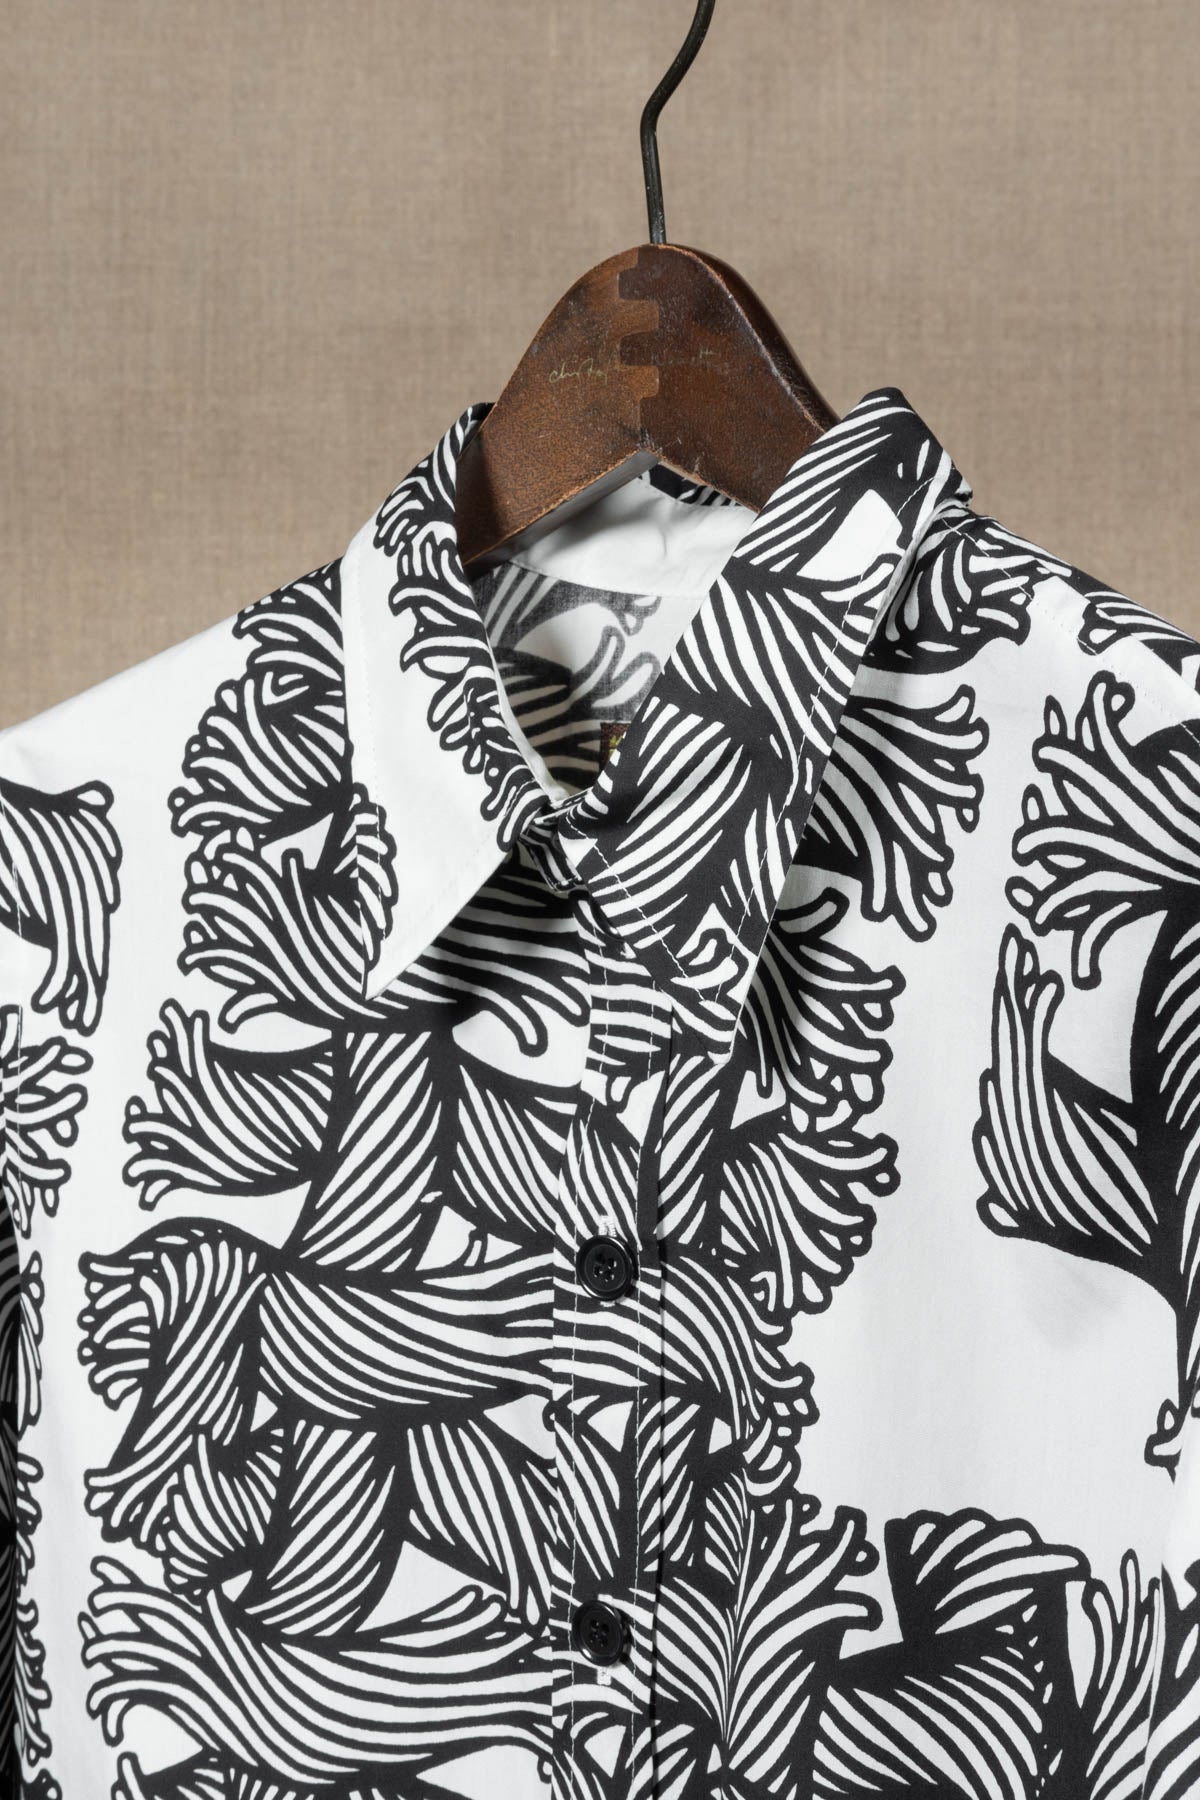 Louis Vuitton Christopher Nemeth White Monogram Button Down Shirt